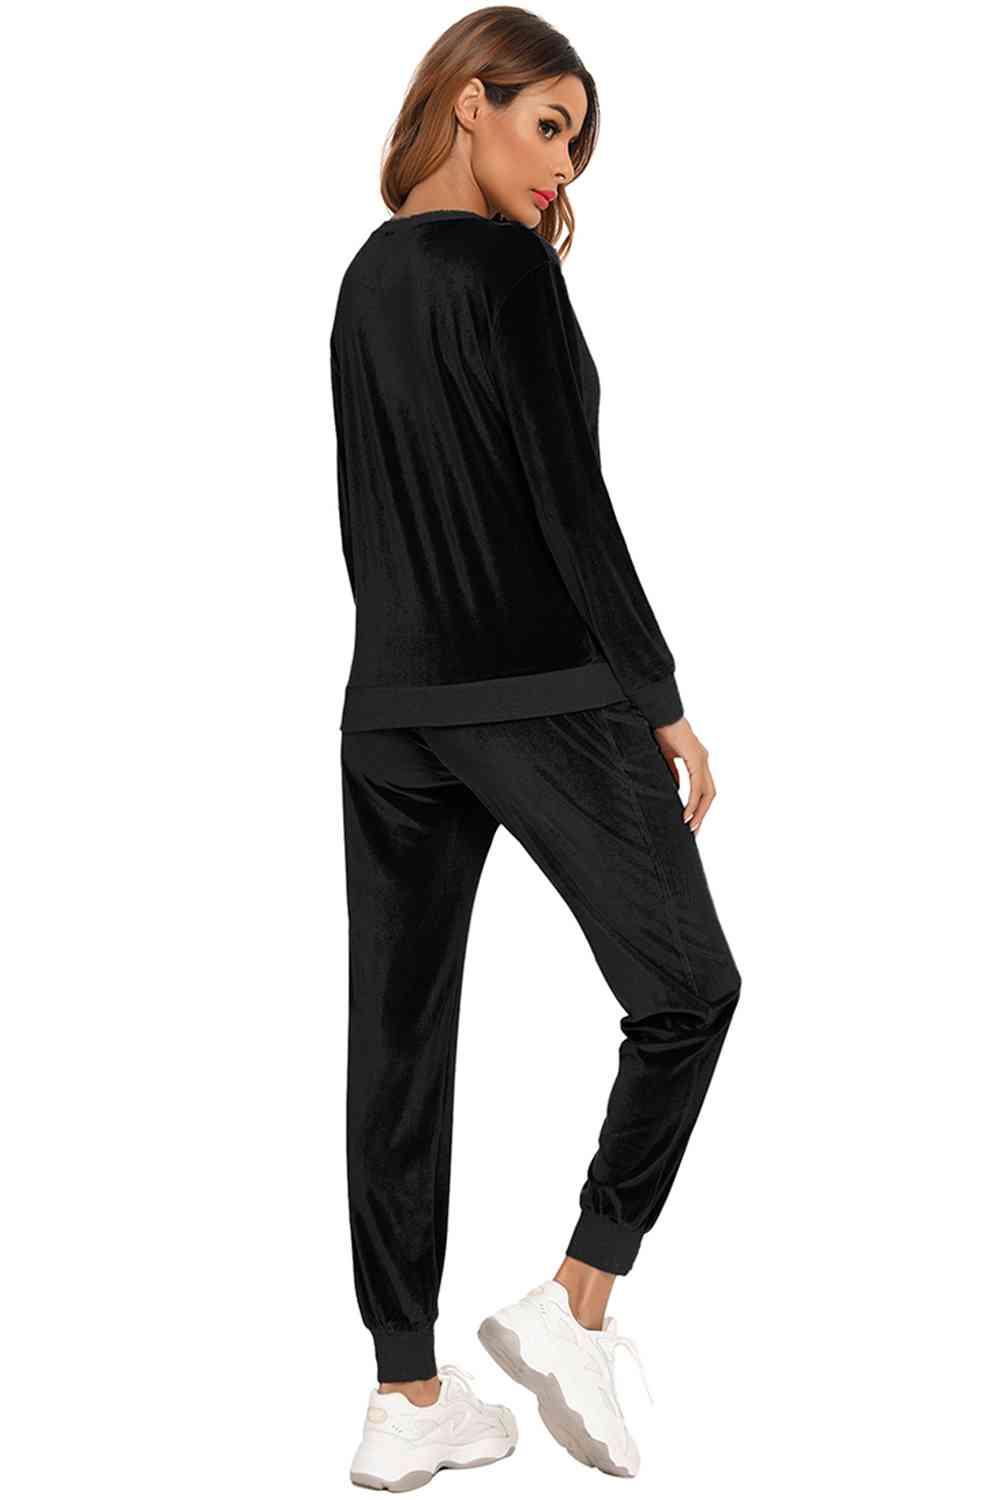 Round Neck Long Sleeve Loungewear Set with Pockets - Immenzive